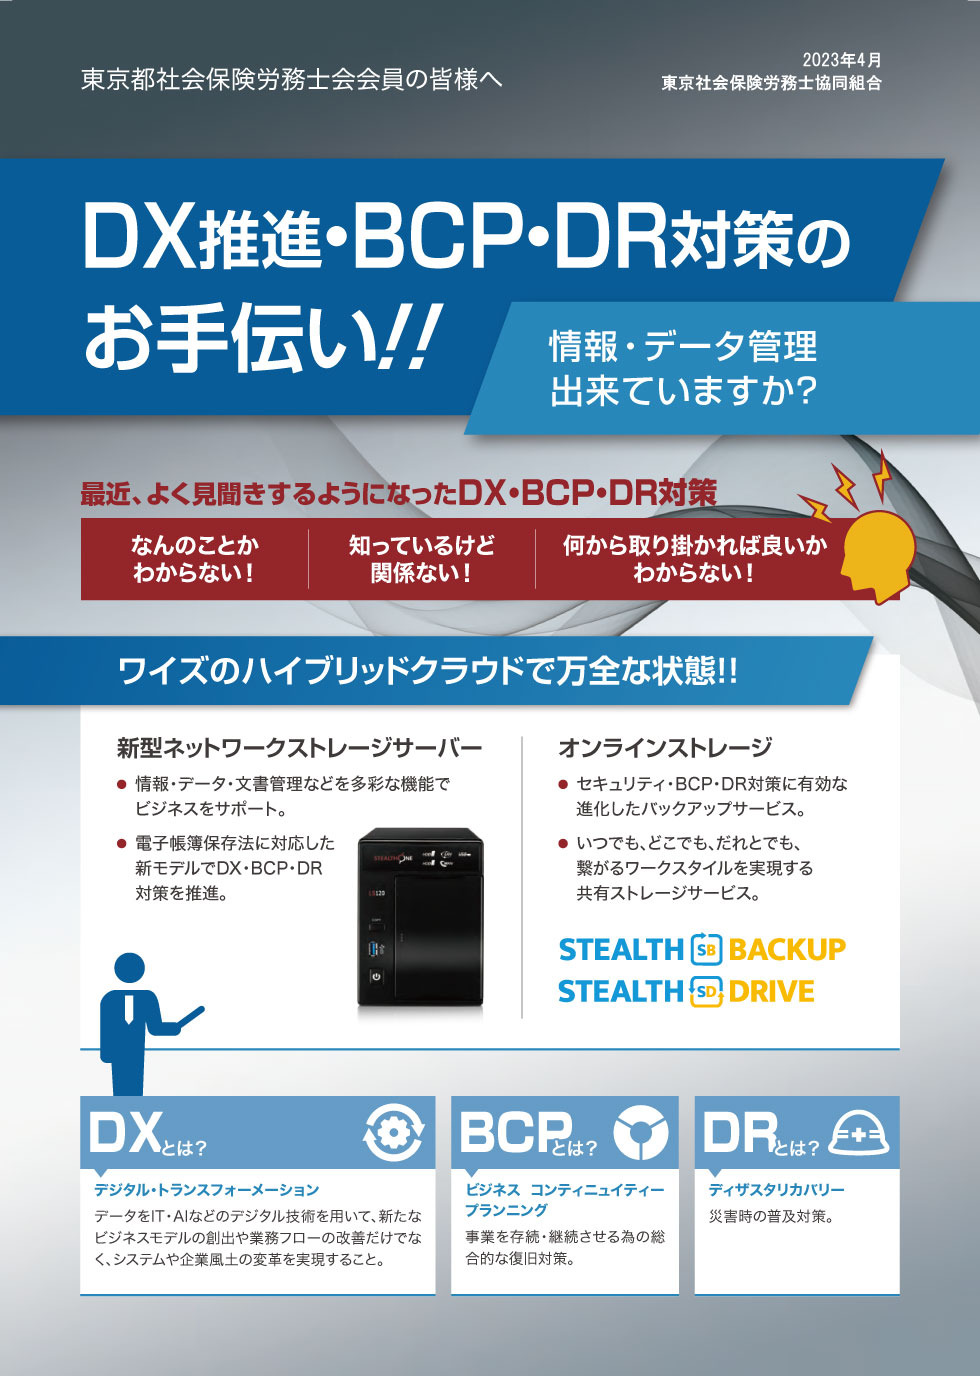 DX推進・BCP・DR対策のご案内